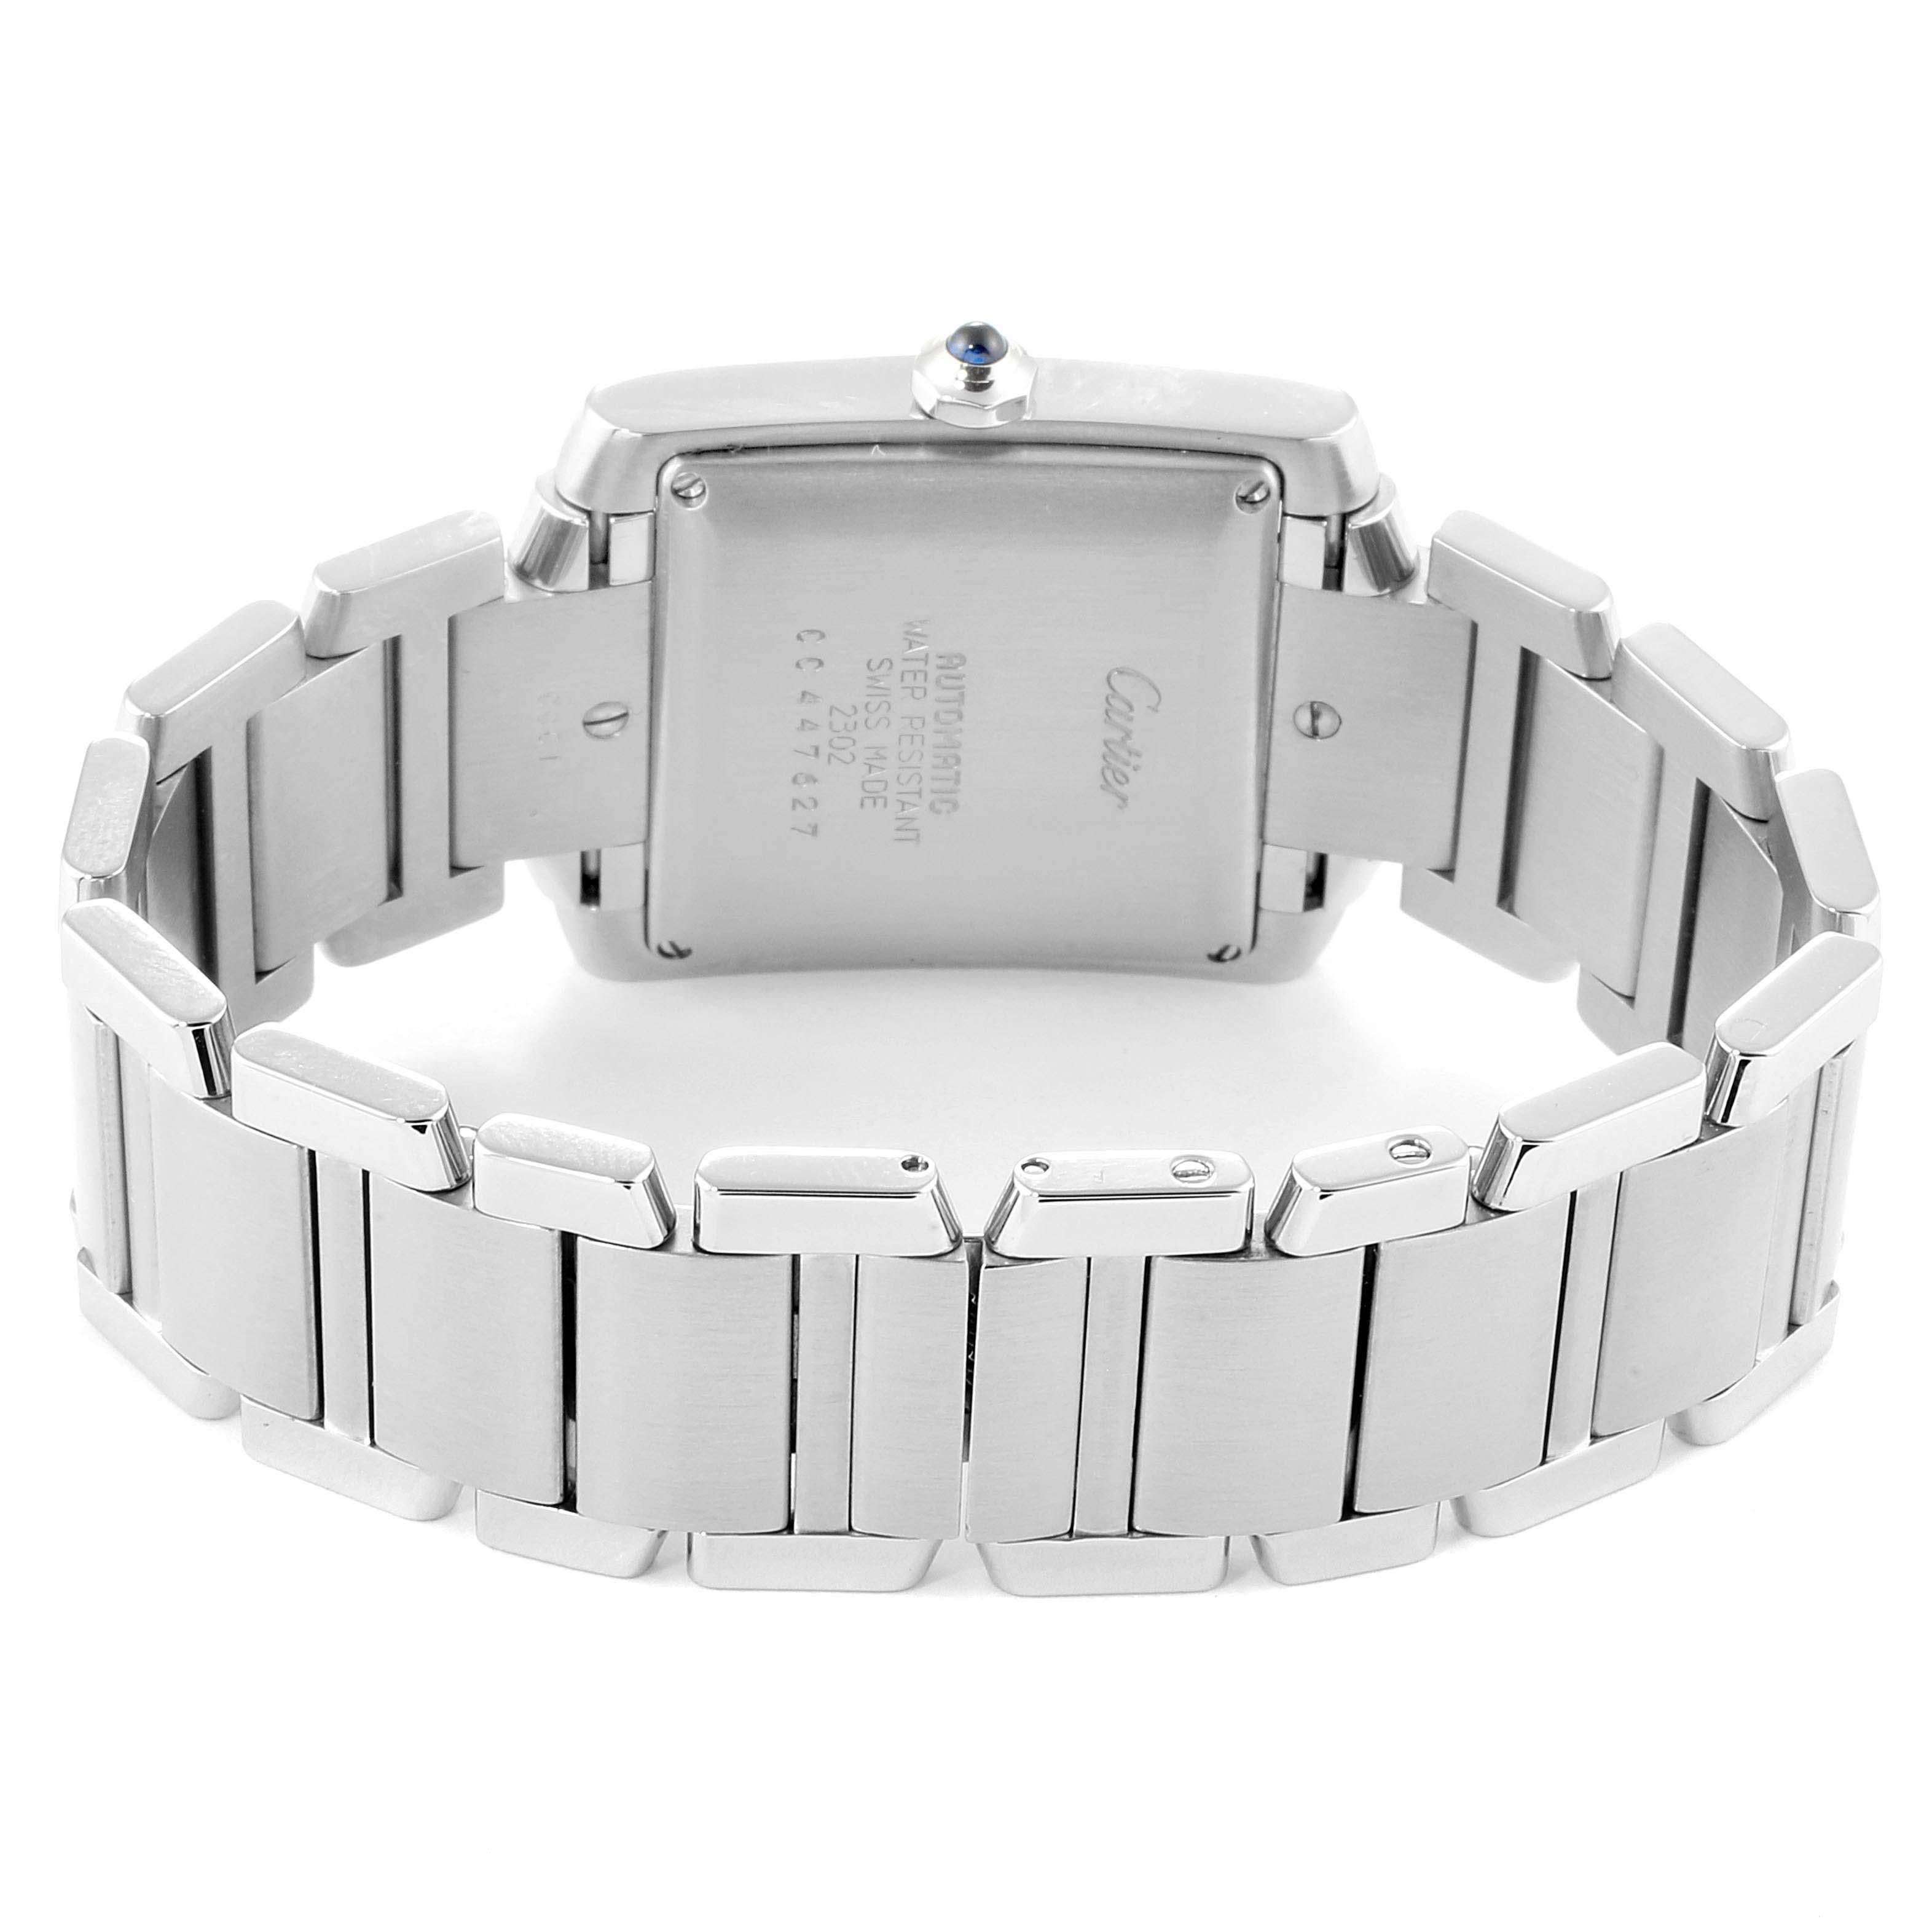 Cartier Tank Francaise Large Steel Automatic Men's Watch W51002Q3 For Sale 3